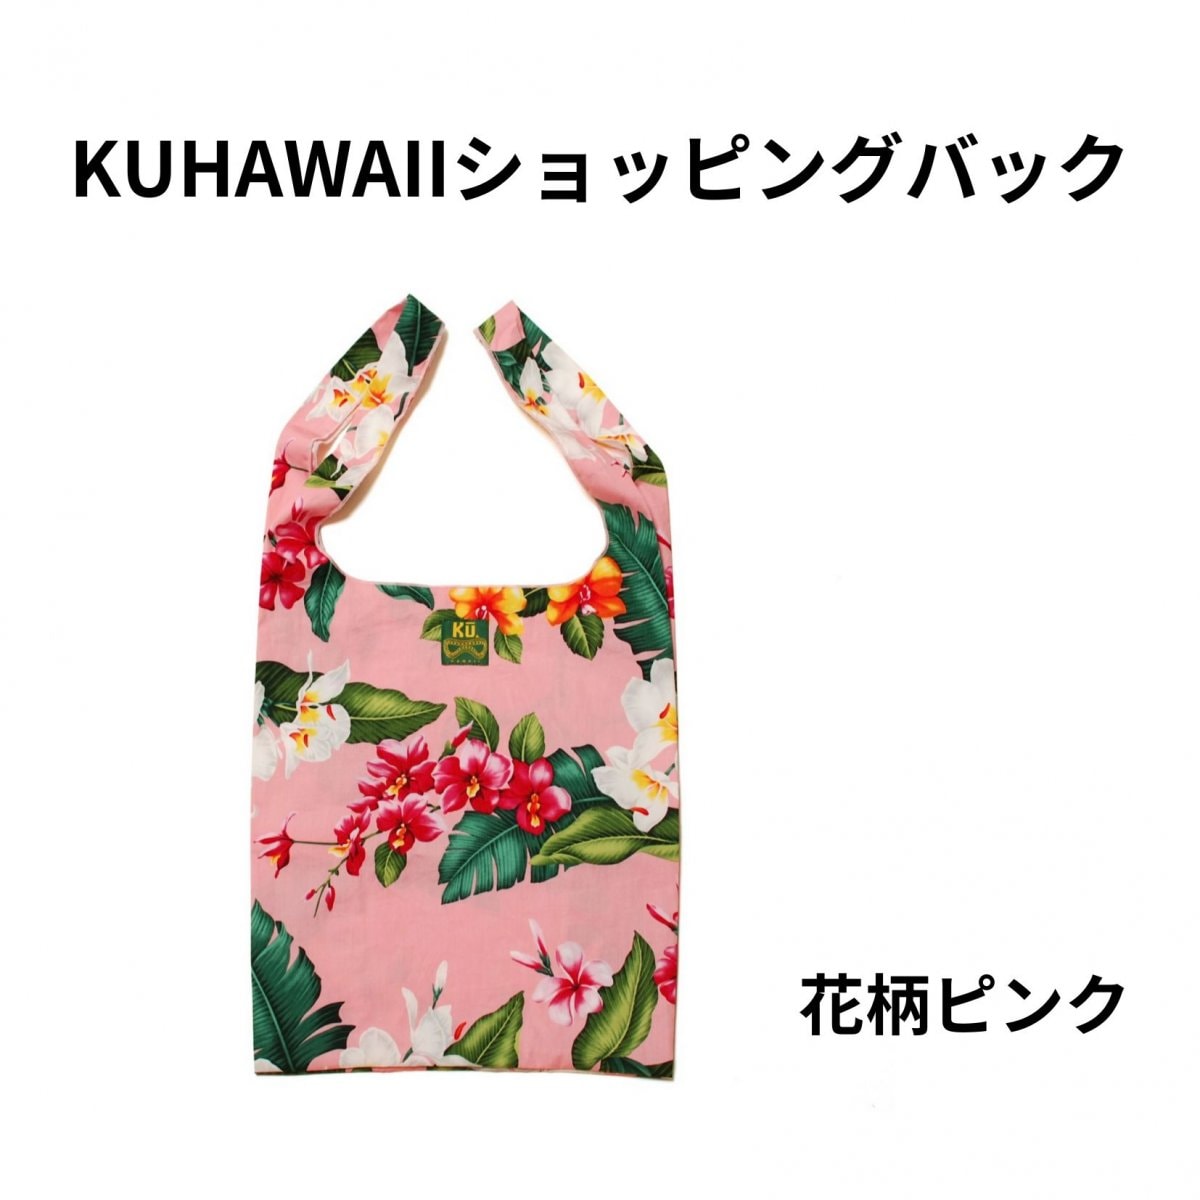 Ku.HAWAII オリジナルショッピングバッグ